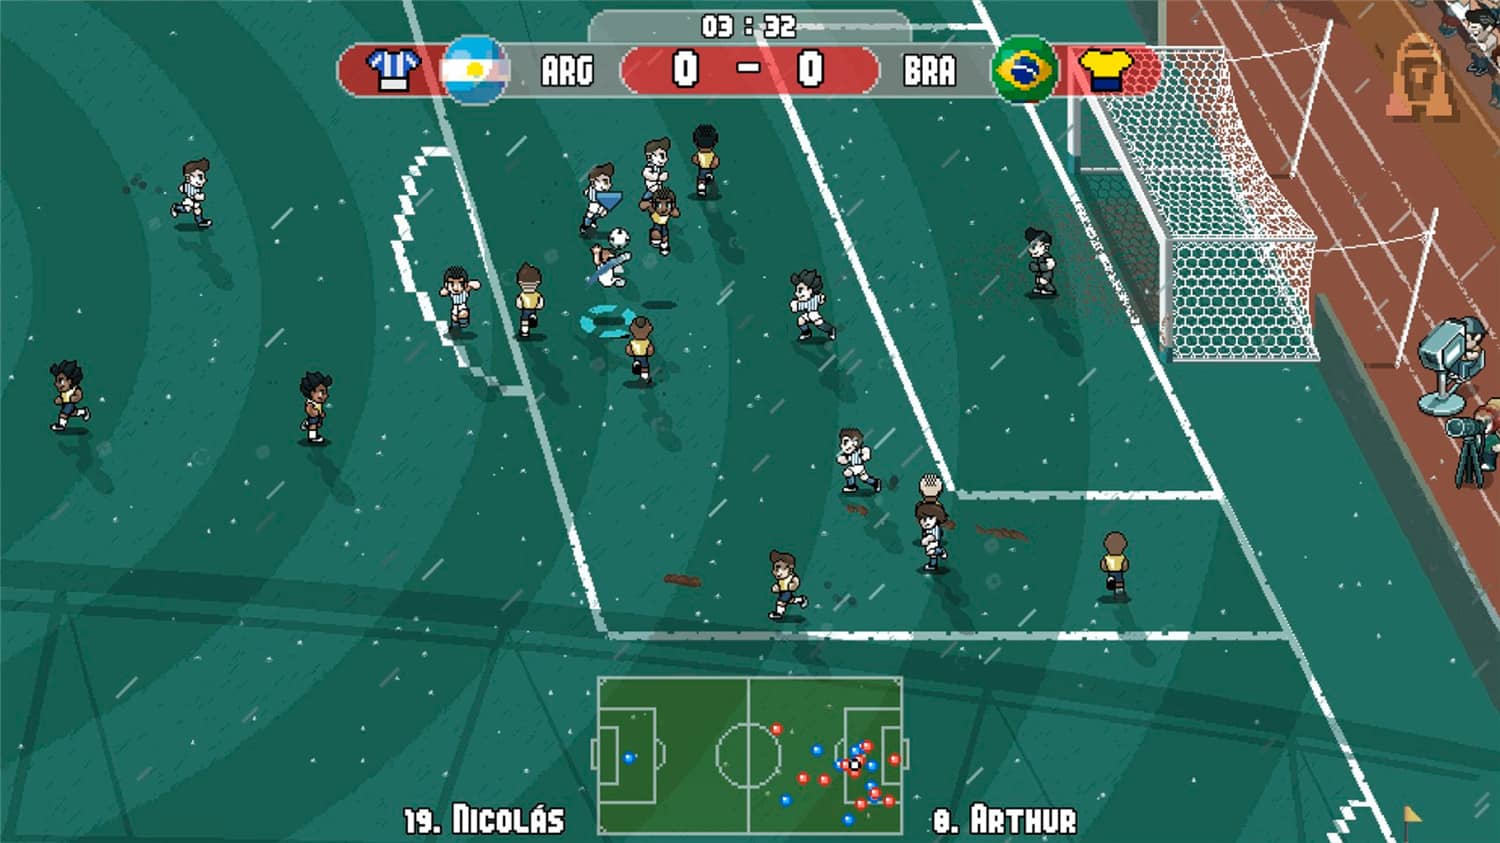 像素世界杯足球赛：终极版/Pixel Cup Soccer - Ultimate Edition Build.13873018 官方简体中文 556MB插图5